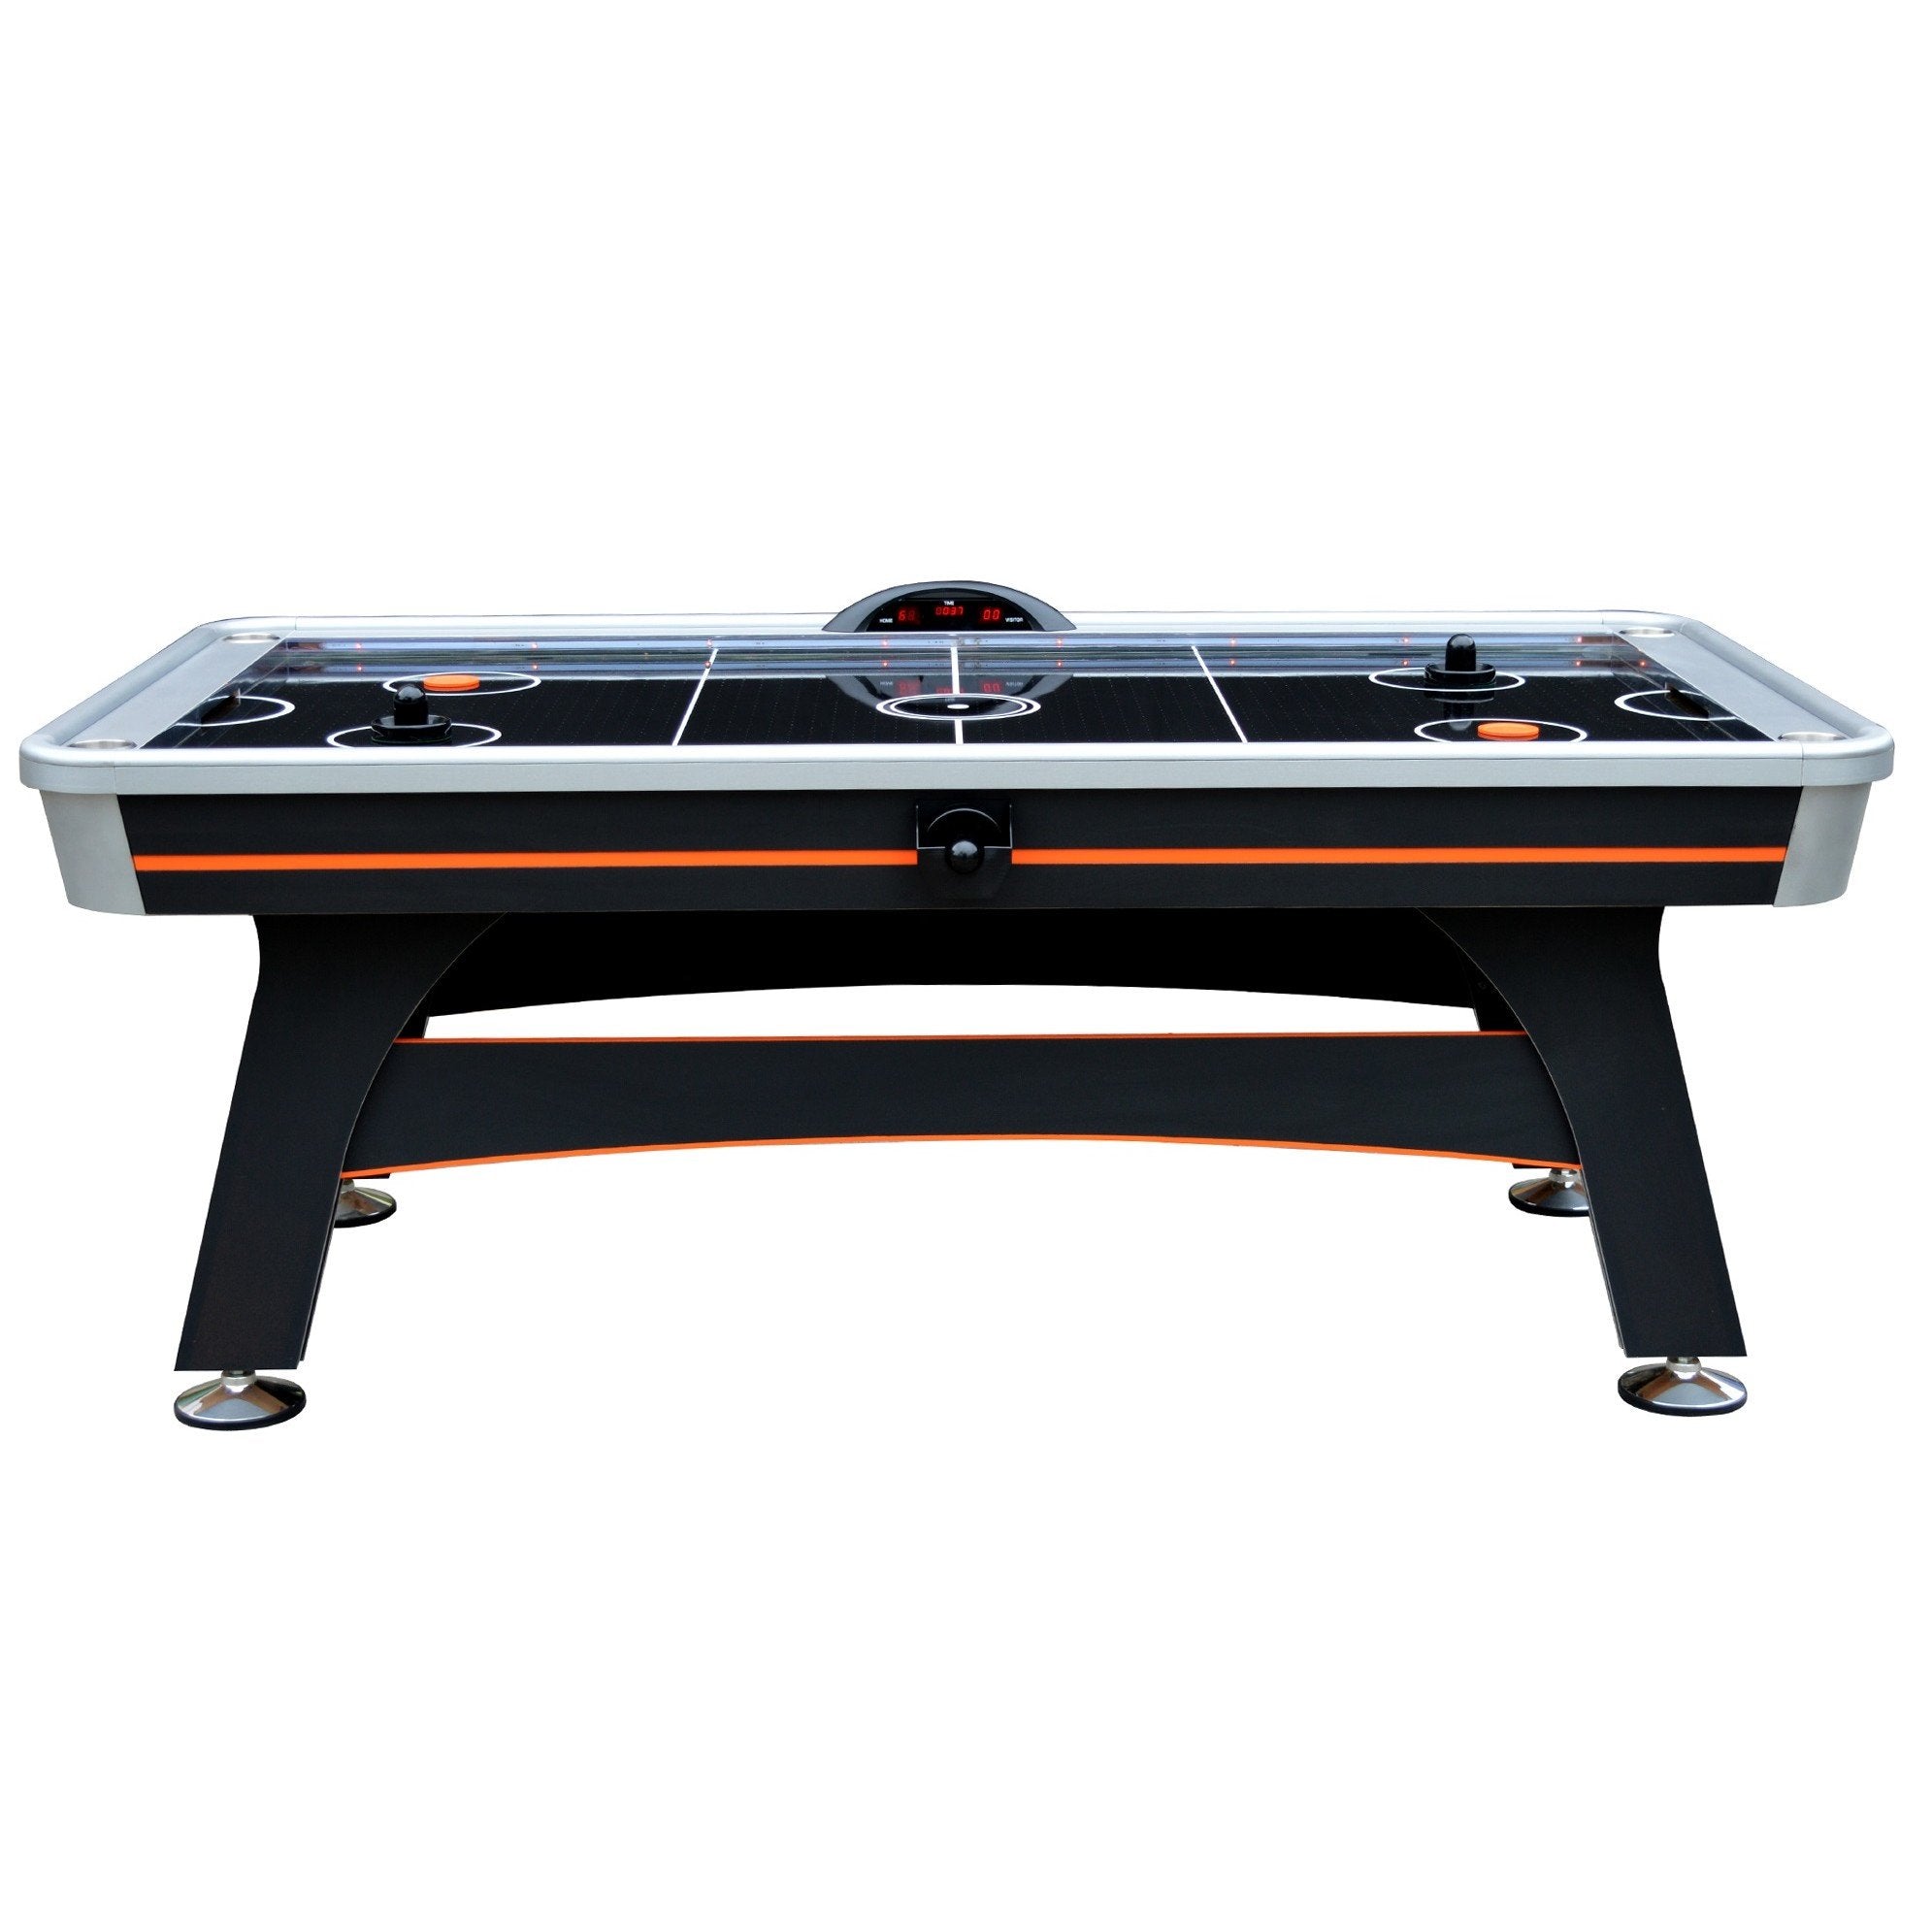 Picture of Hathaway Trailblazer 7' Air Hockey Table in Black/Orange